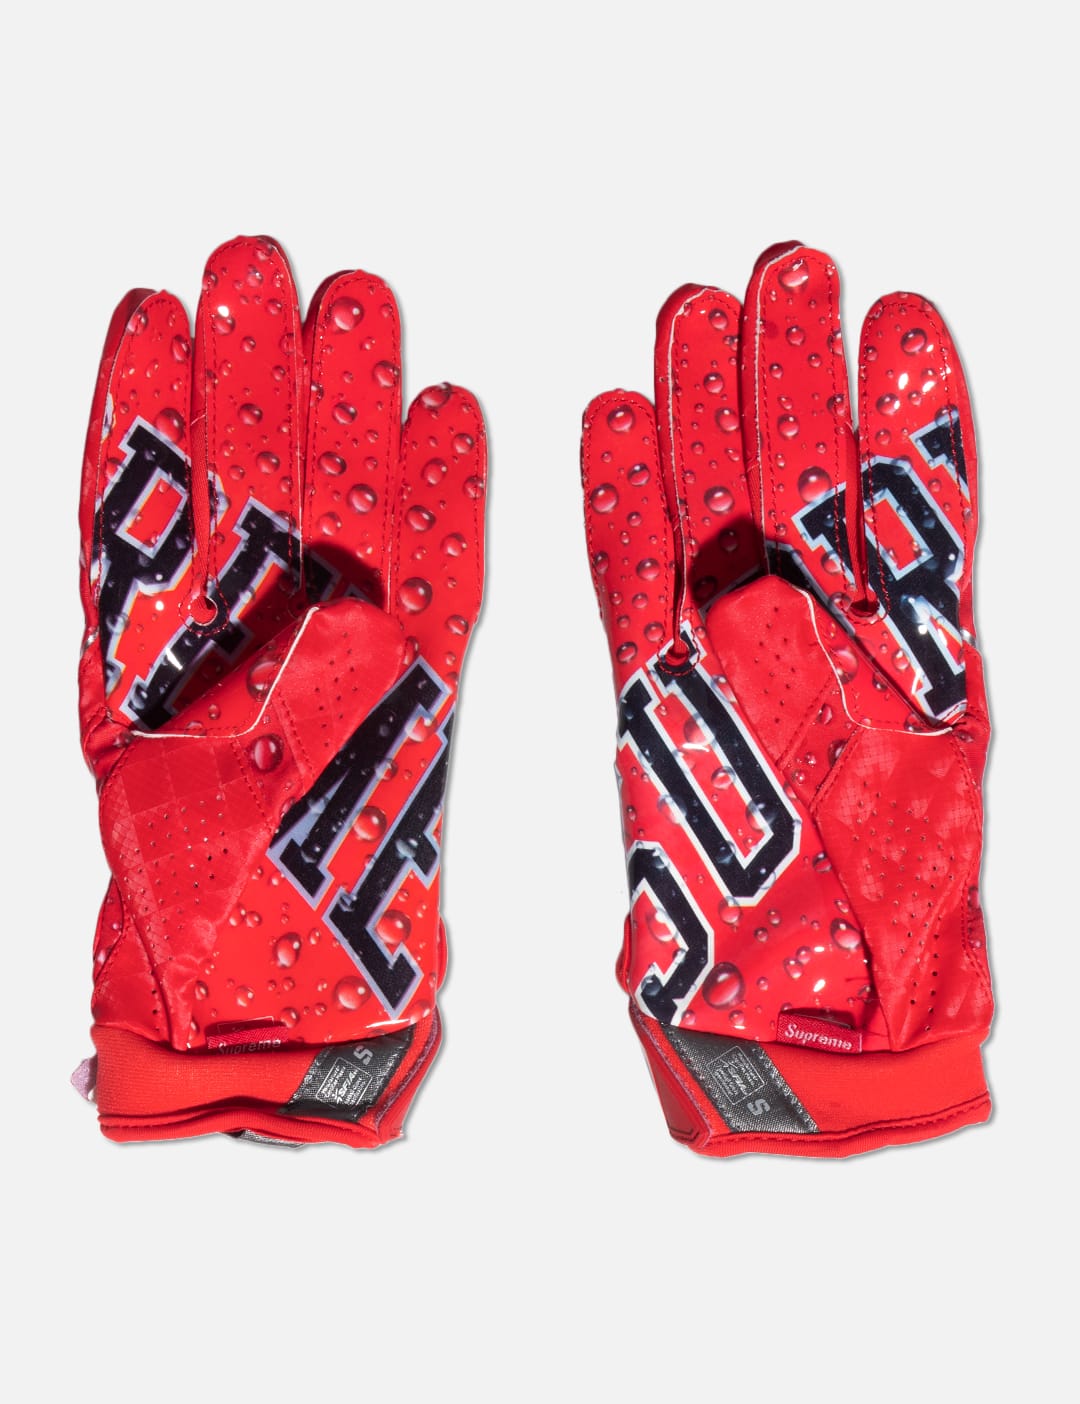 Supreme - Supreme x Nike Vapor Jet 4.0 Football Gloves | HBX 